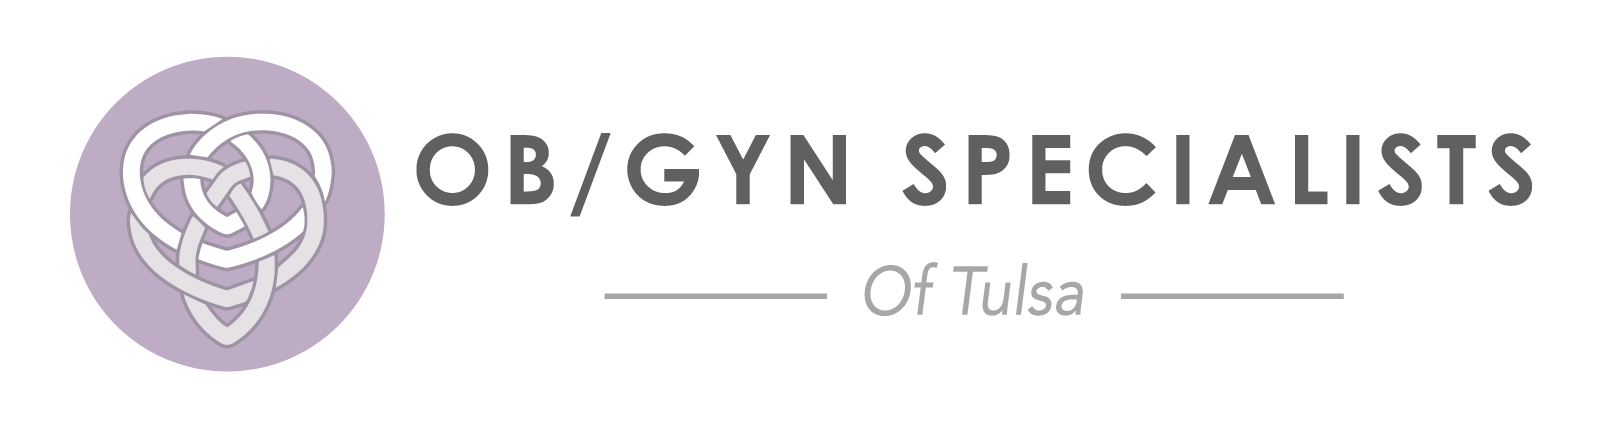 Obgyn Specialists Of Tulsa